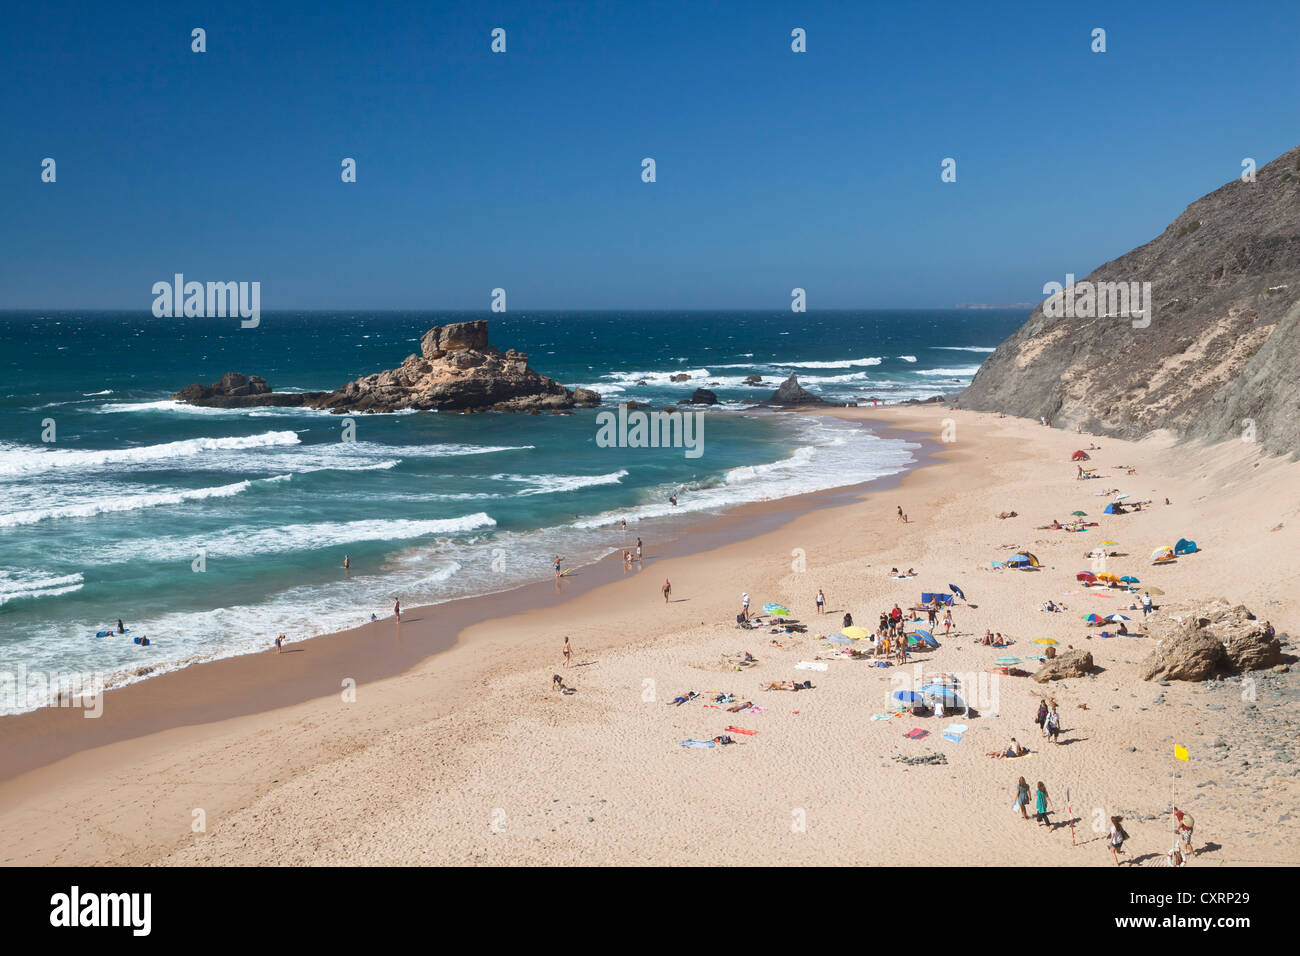 Beach of Praia da Castelejo, Atlantic coast, Algarve, Portugal, Europe Stock Photo